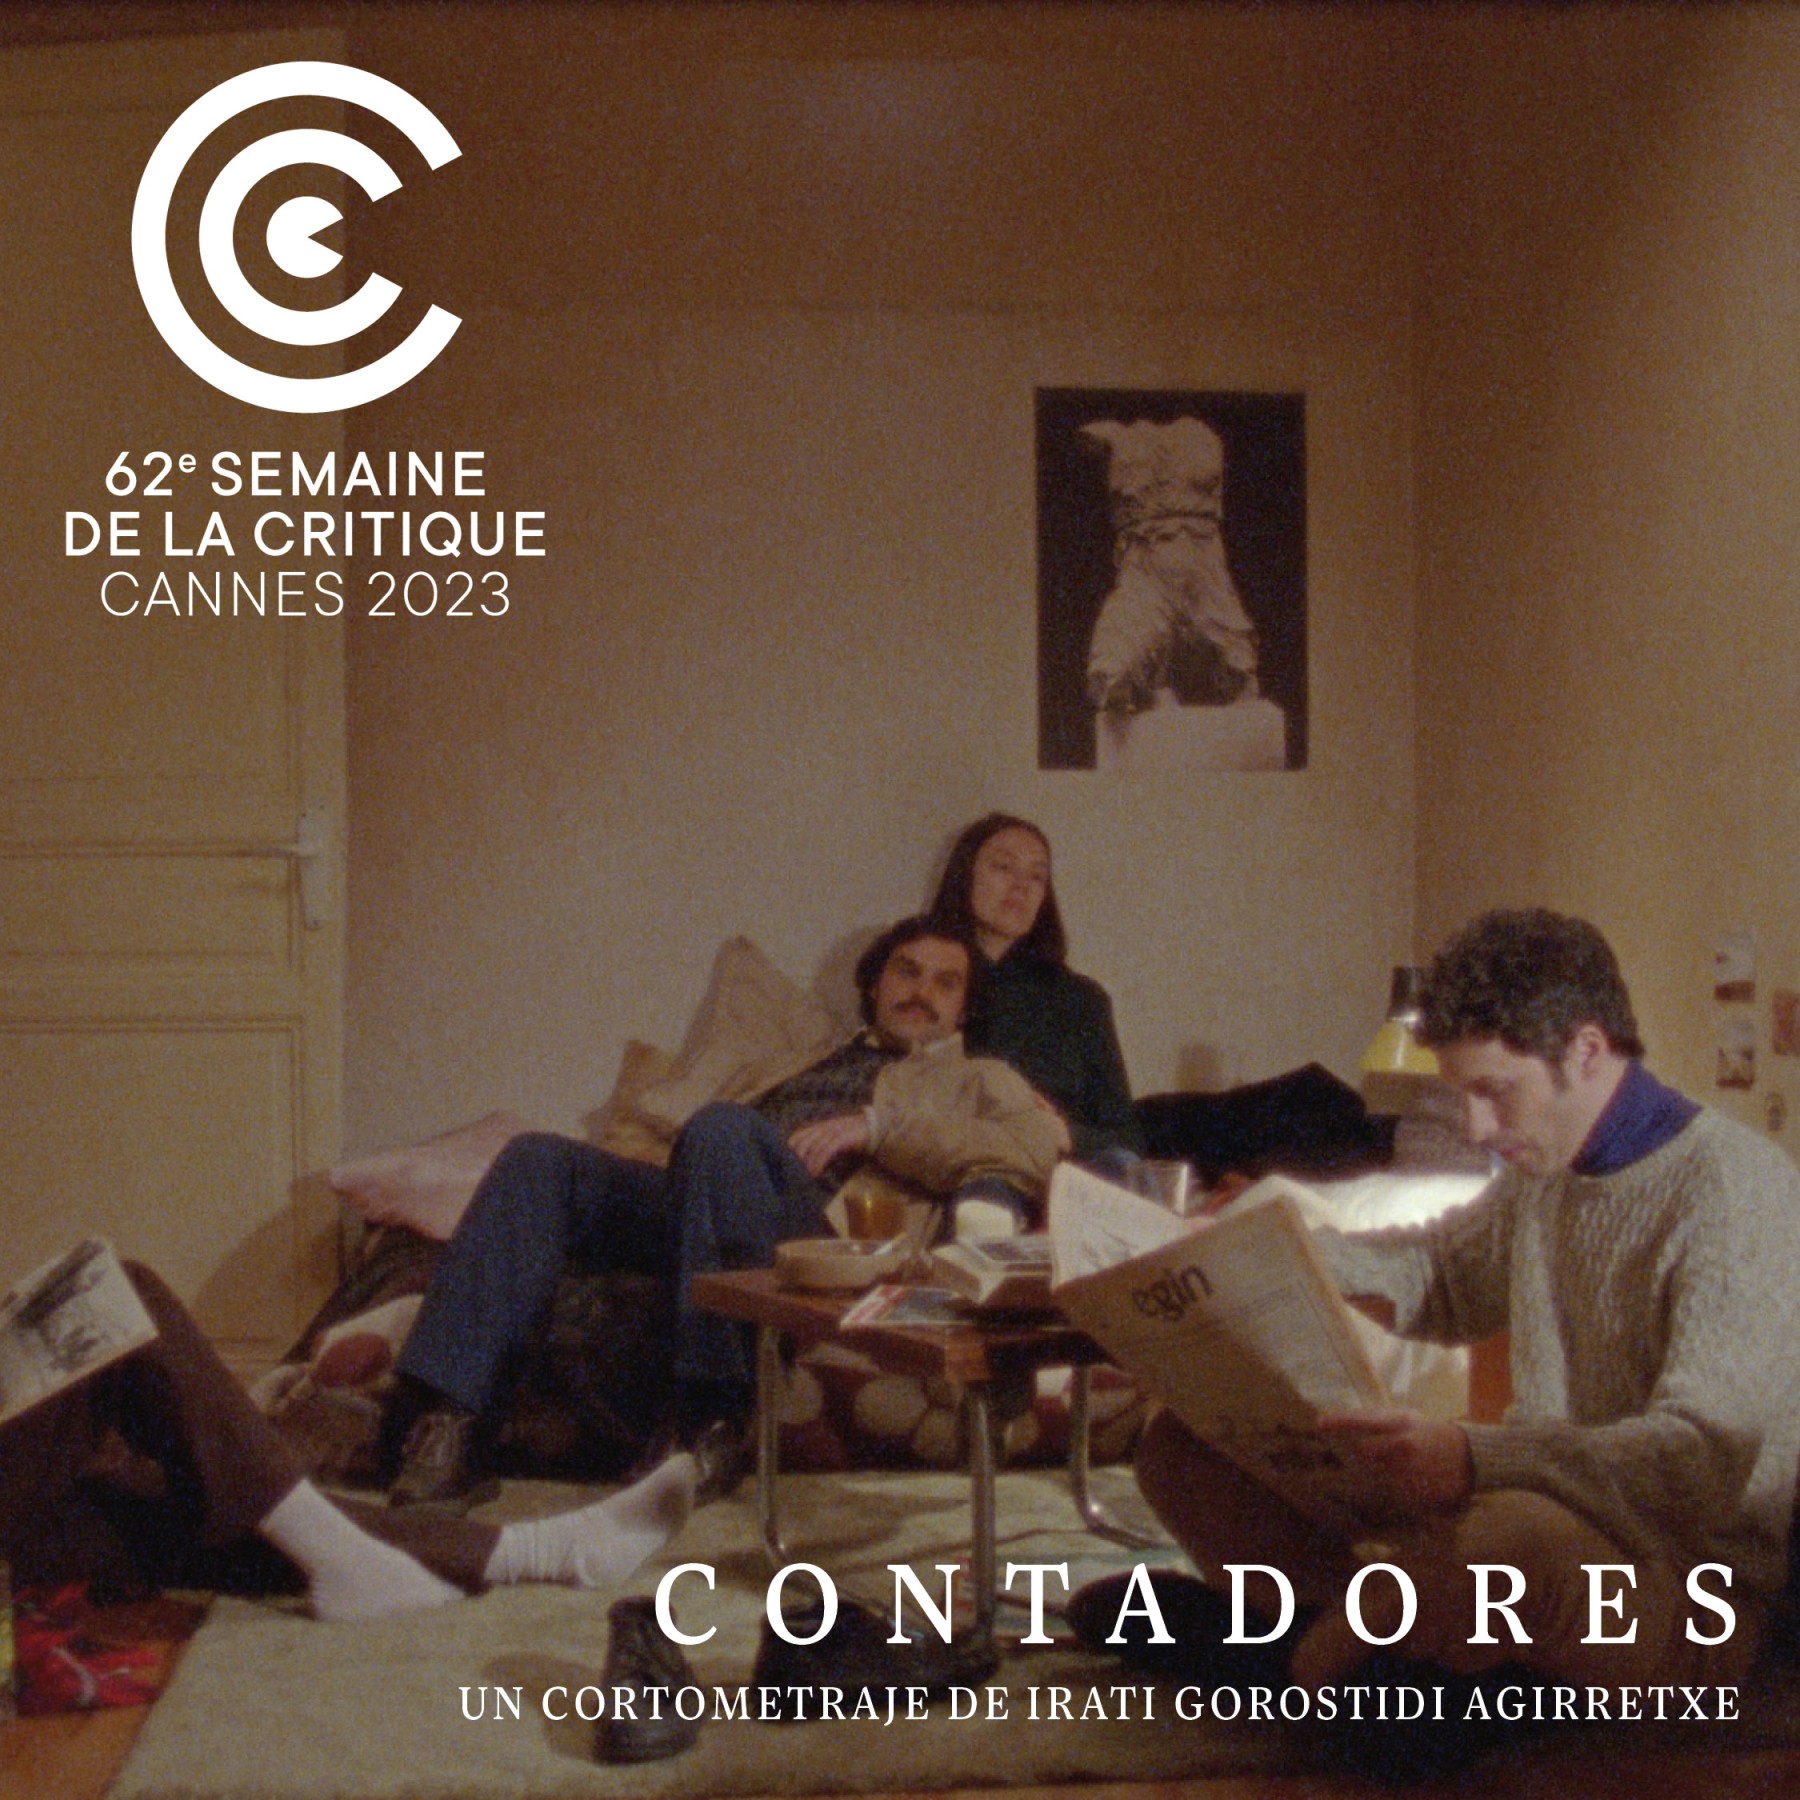 ¡’Contadores’, de Irati Gorostidi, en la Semana de la Crítica de Cannes! 